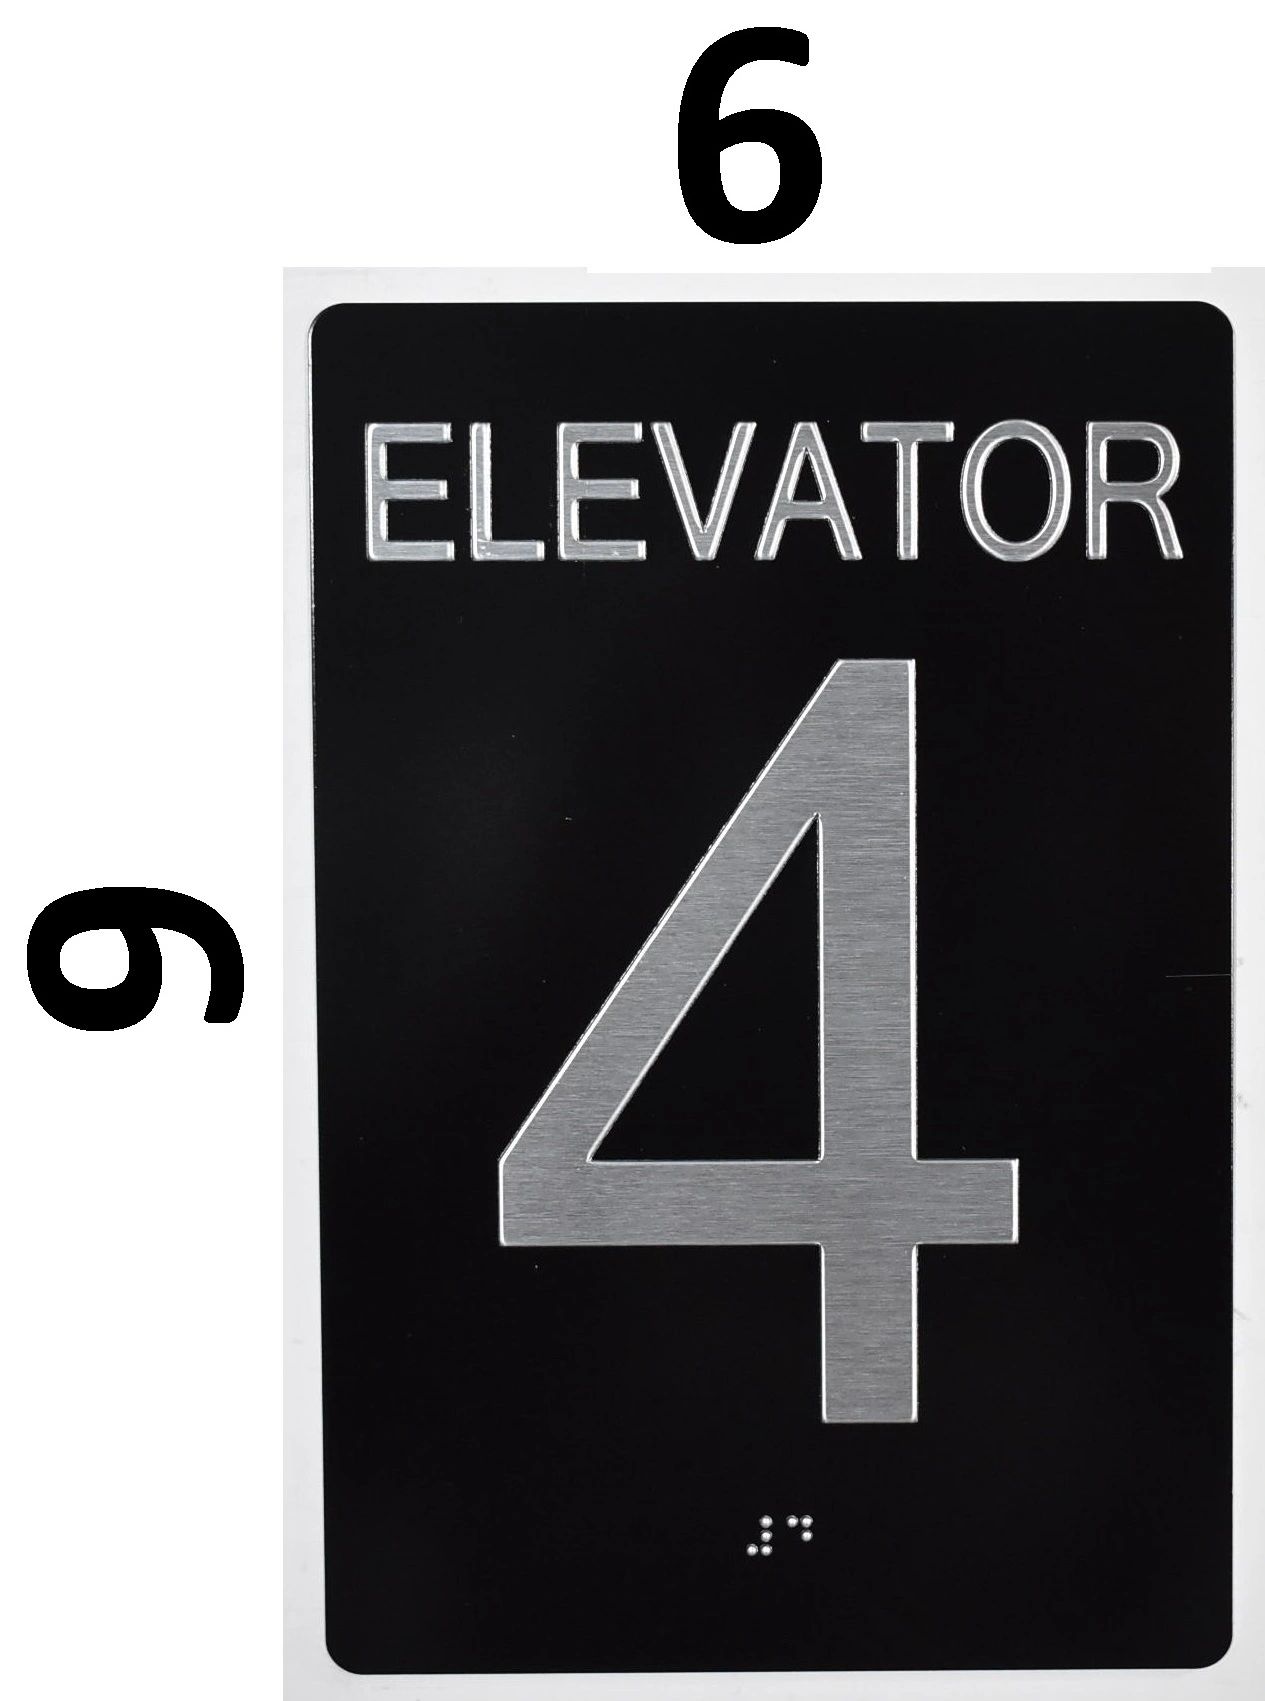 "6" Elevator ADA Braille 4 x 4 Jamb Plate Stainless Steel Black Background 